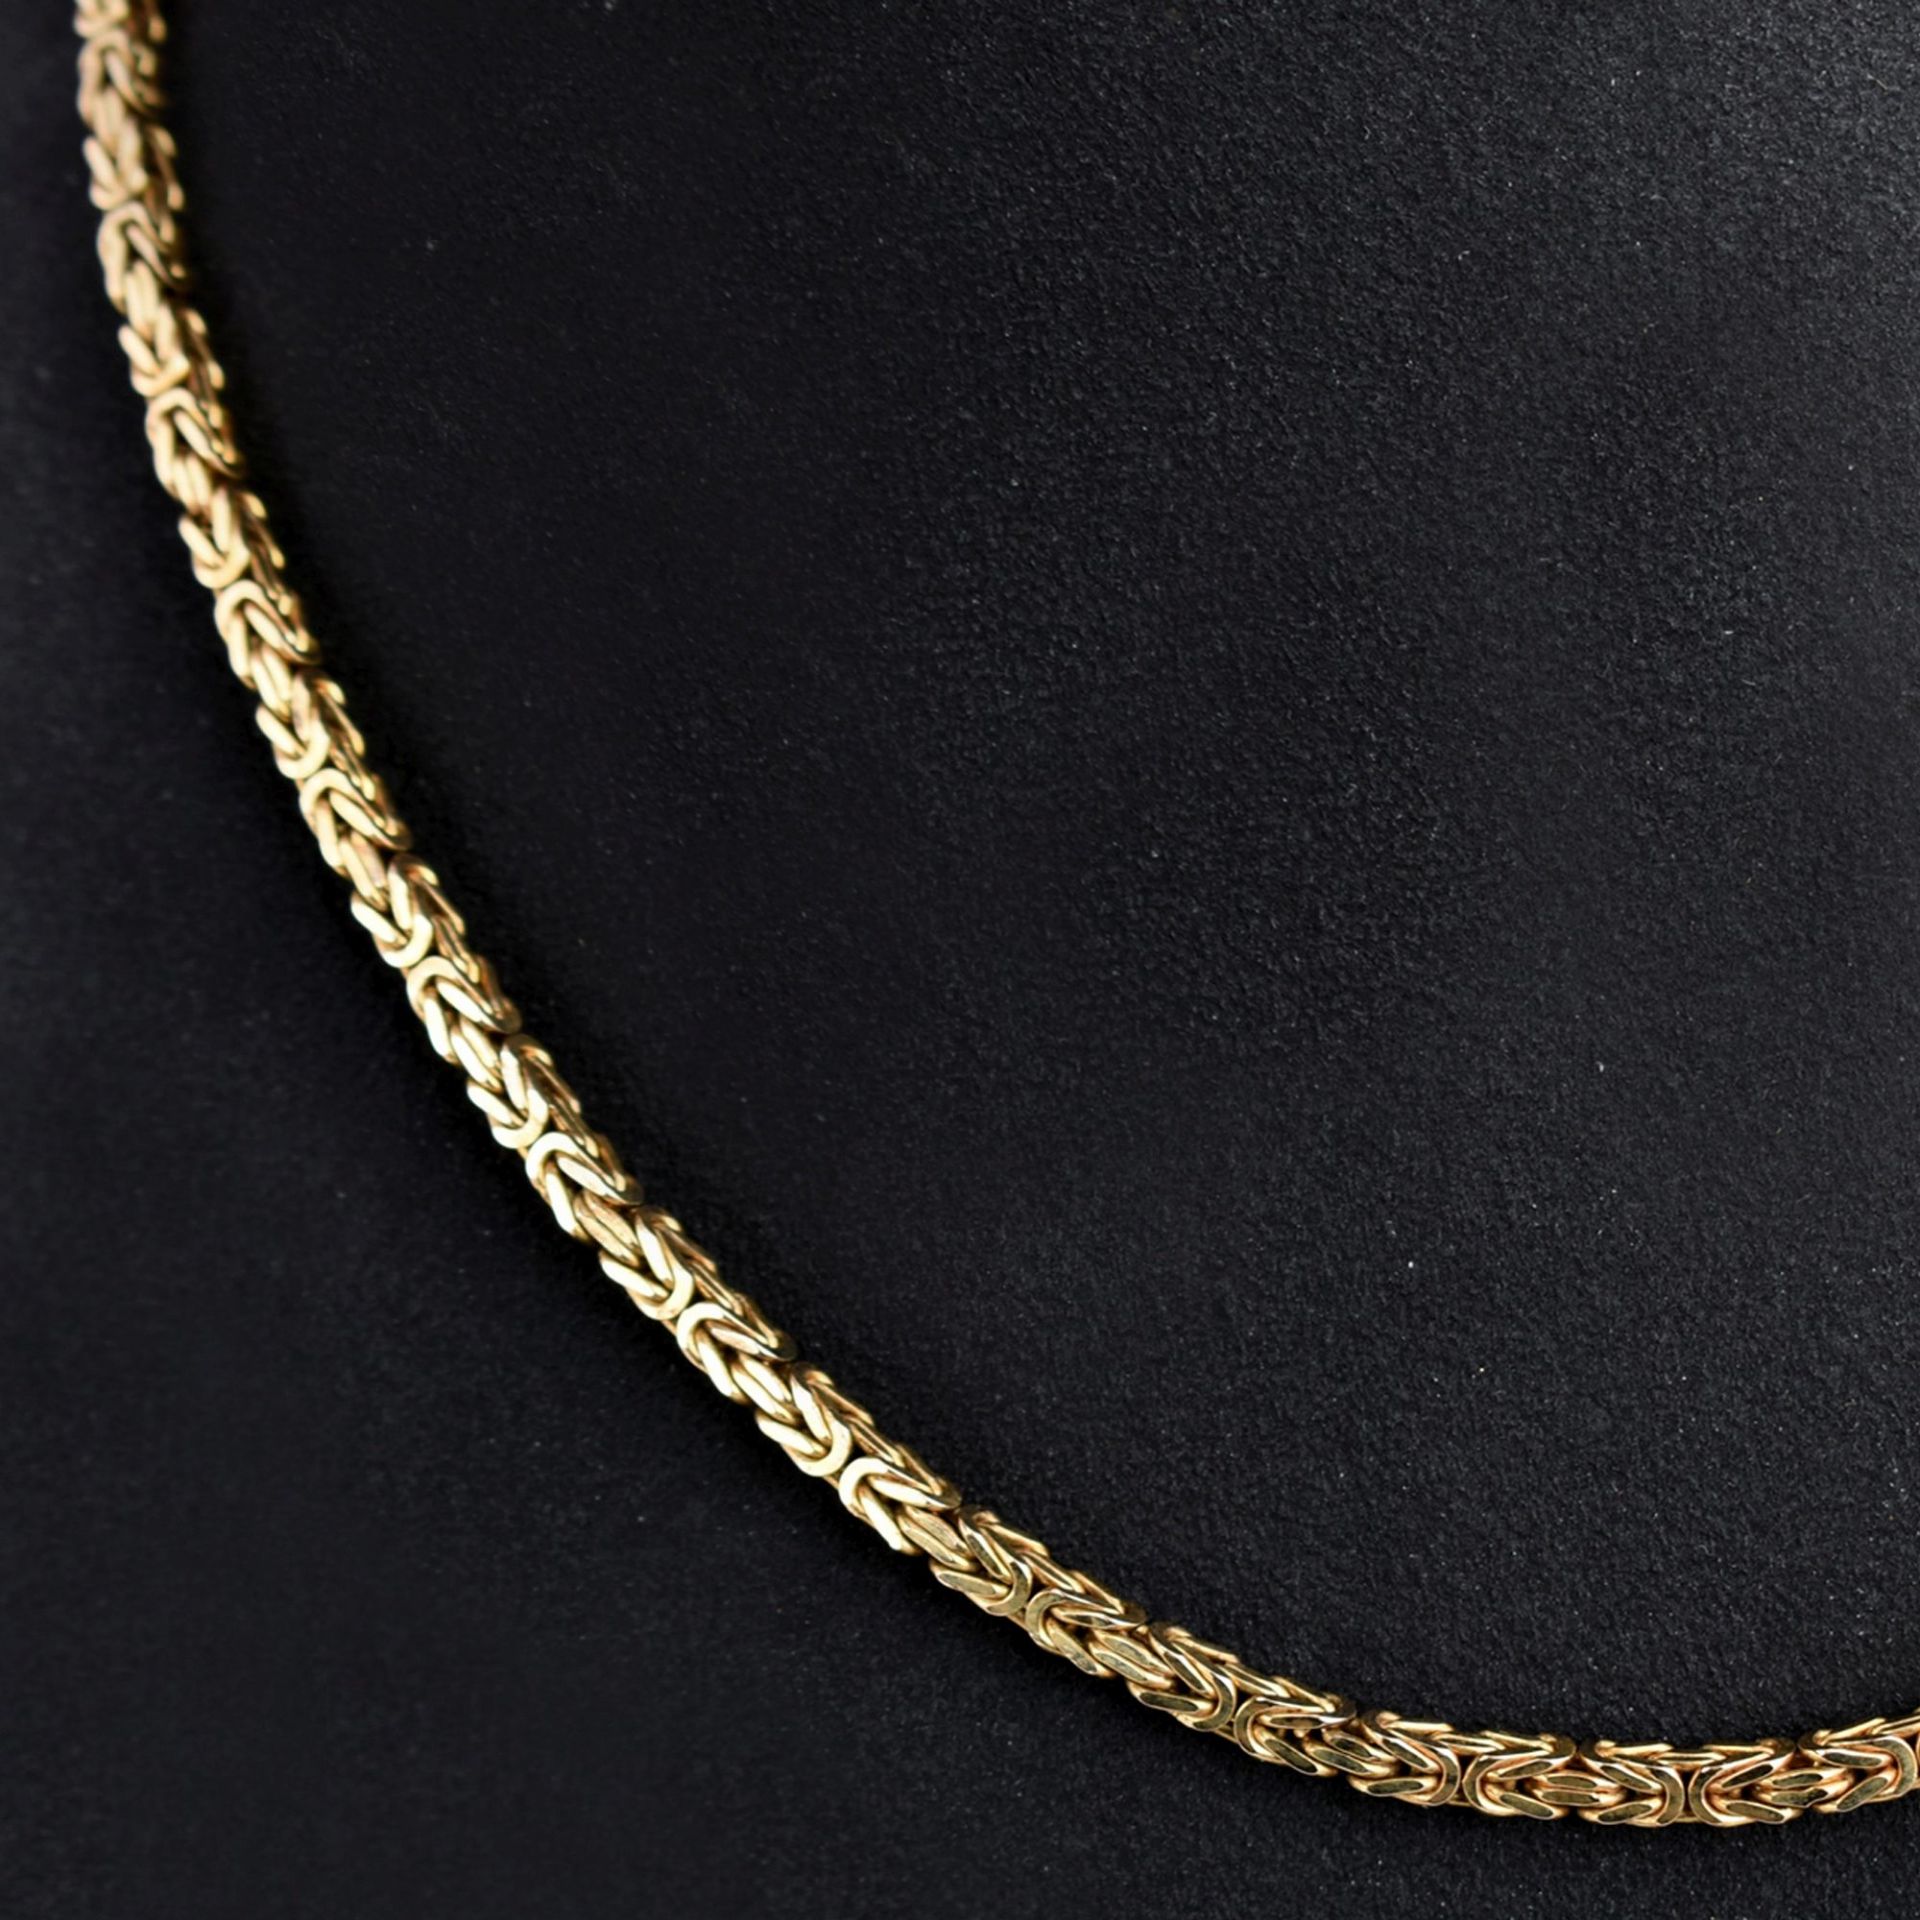 Pulloverkette Silber 925 vergoldet, lange Königskette in stabiler Ausführung, Karabinerschließe, B